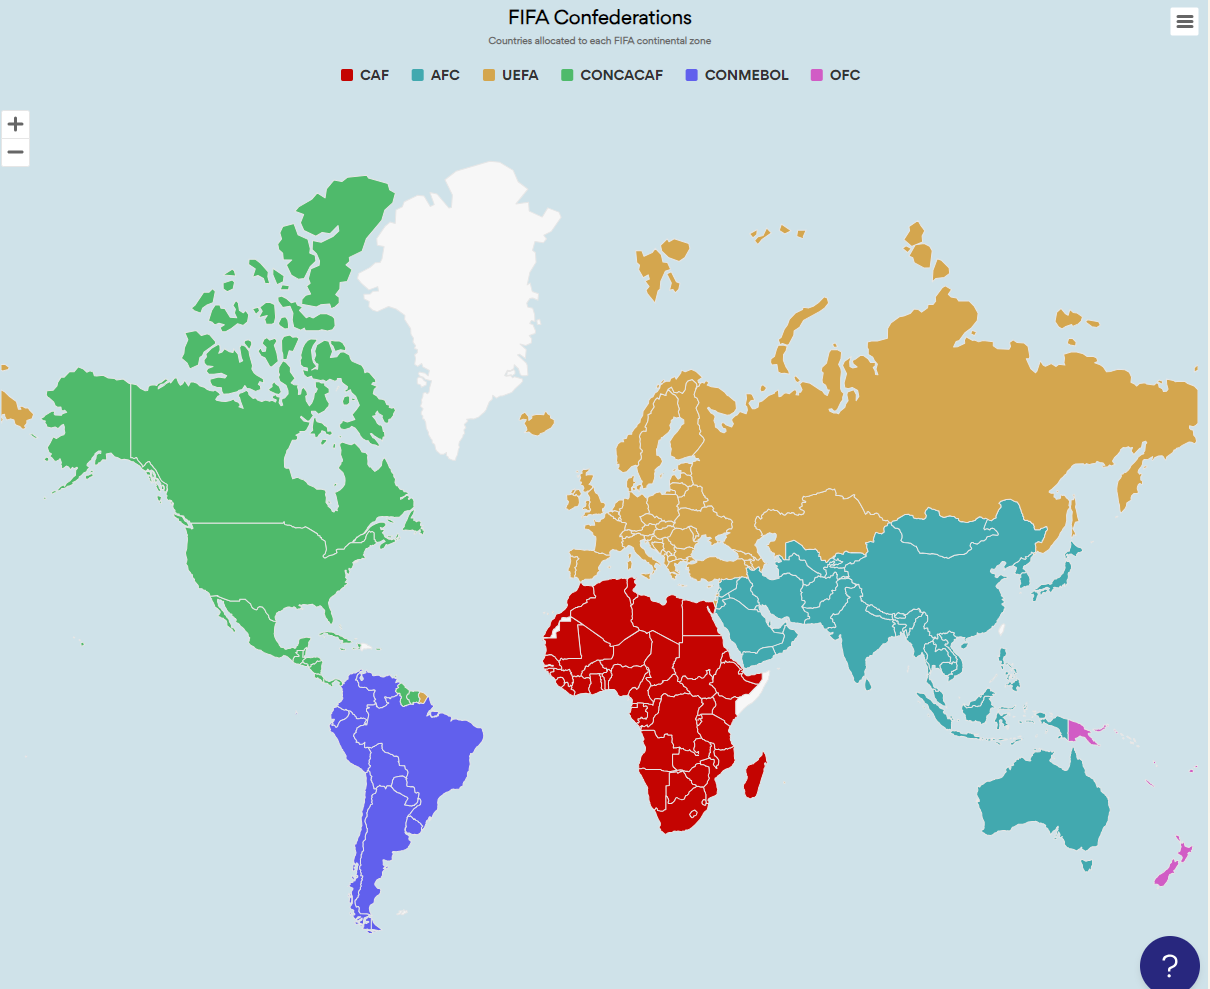 FIFA Confederations - Category map